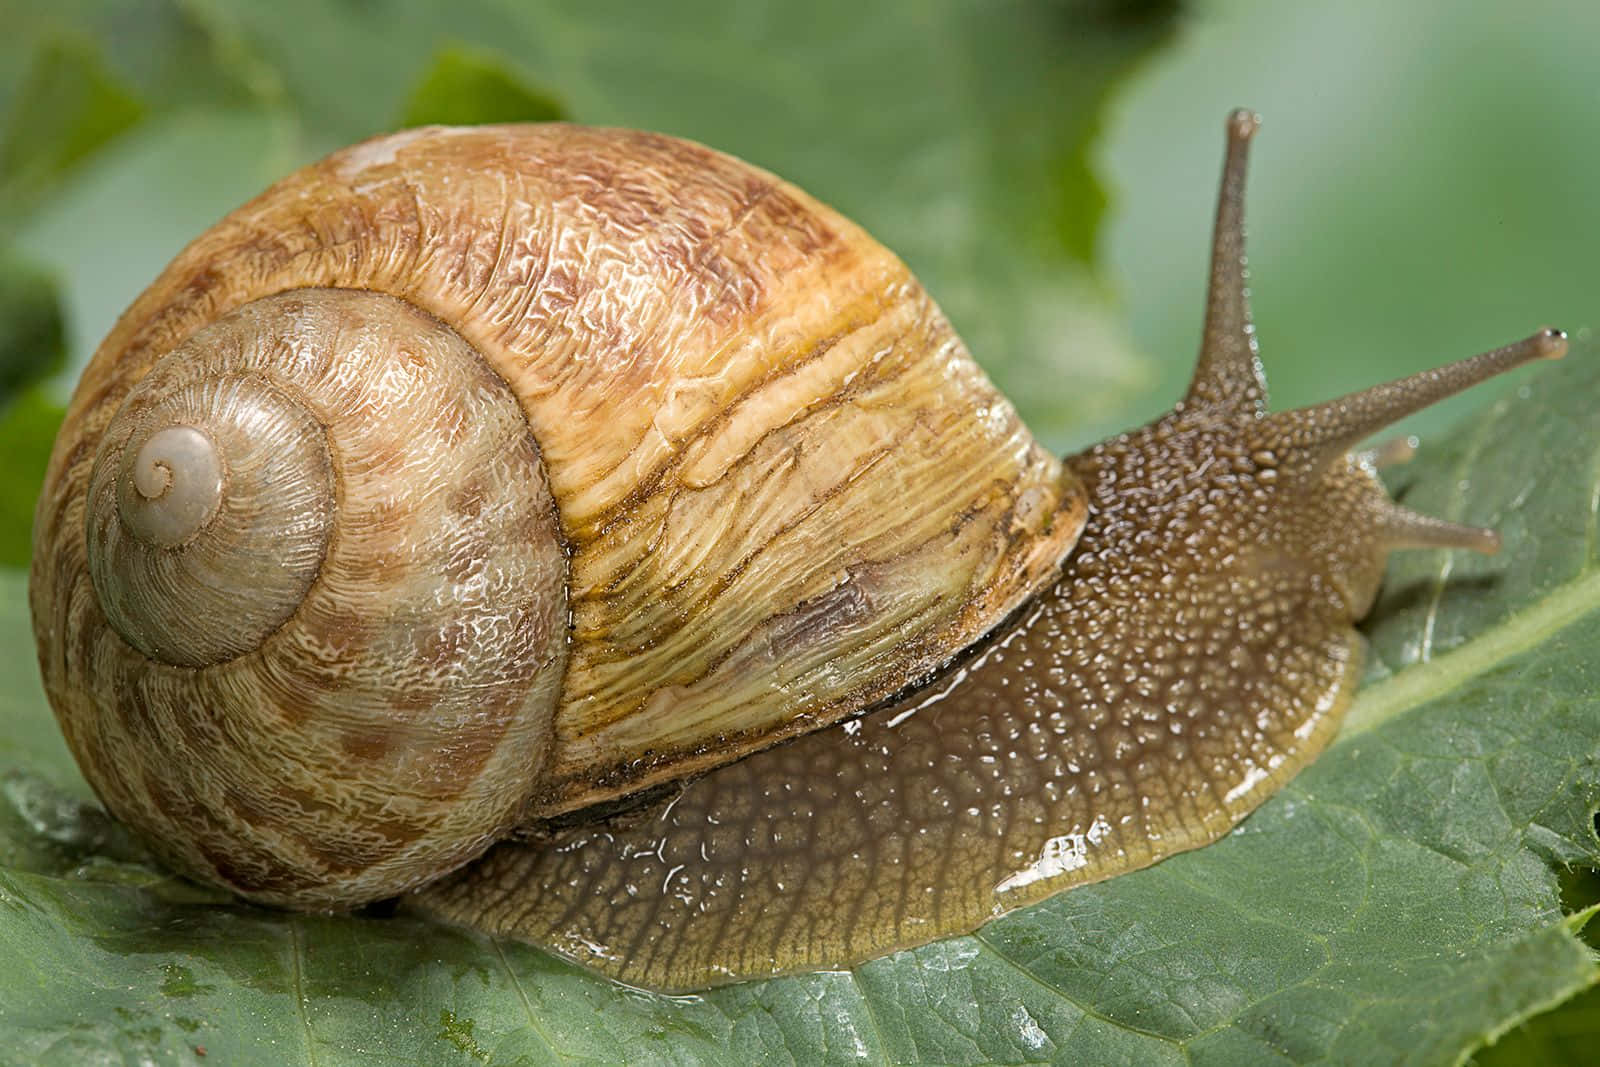 A snail making its way along a sunny sidewalk